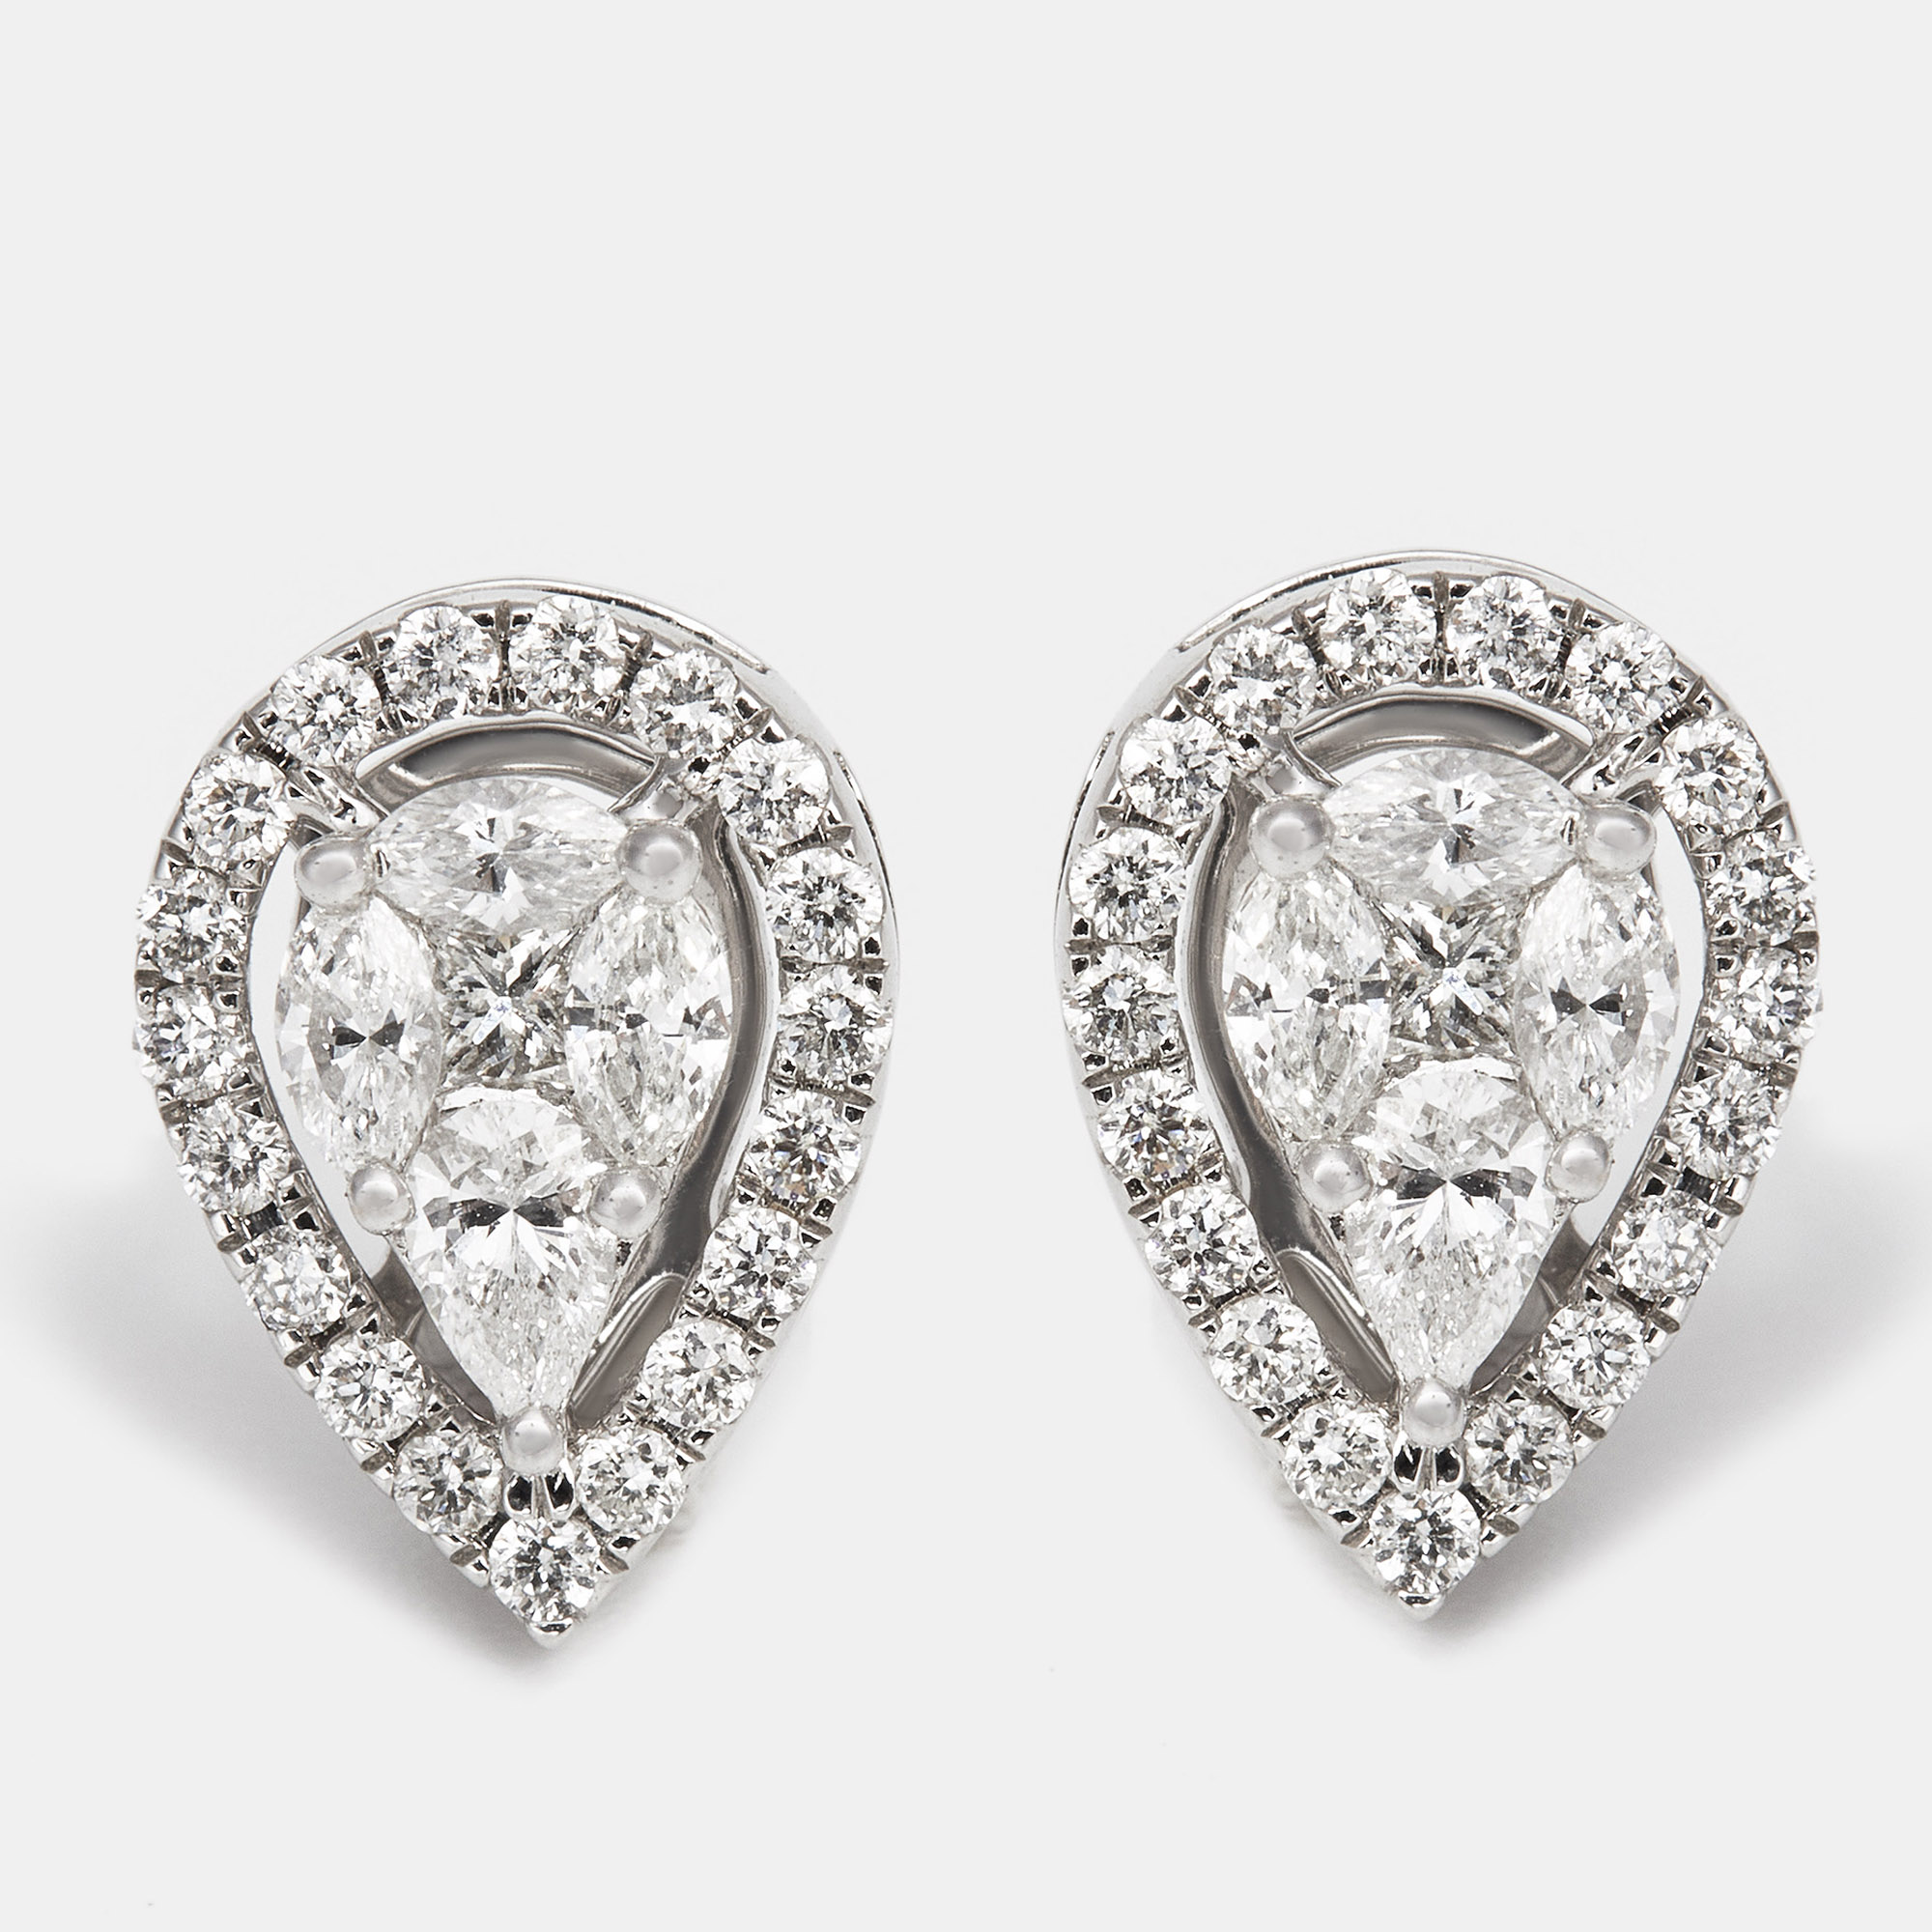 The diamond edit drop shape diamonds 0.61 ct 18k white gold stud earrings